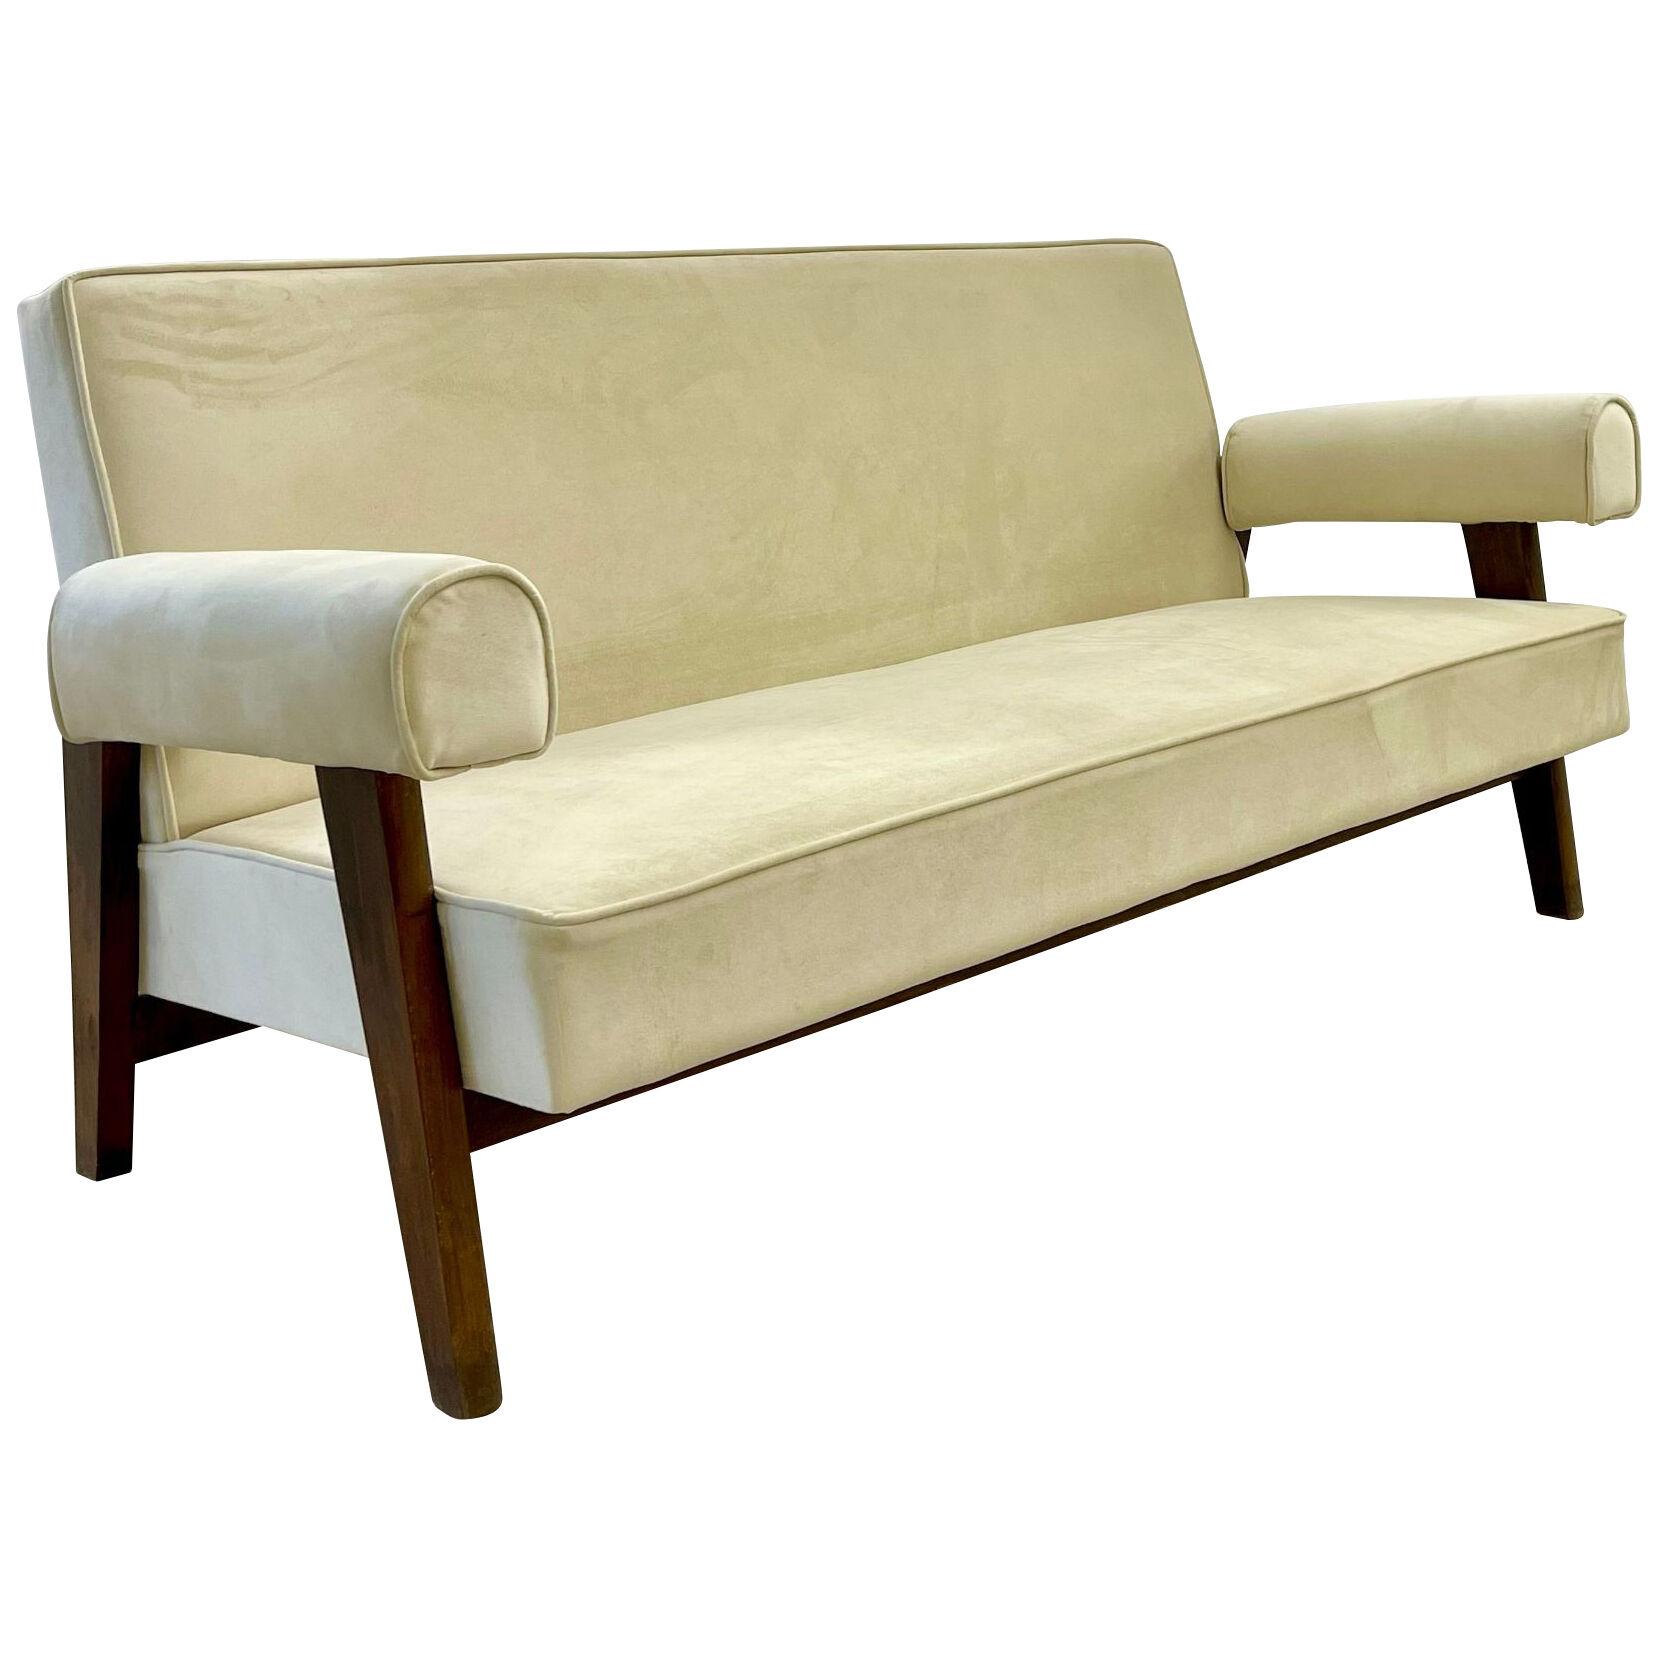 Authentic Pierre Jeanneret Upholstered Bridge Sofa, Mid-Century Modern, Markings